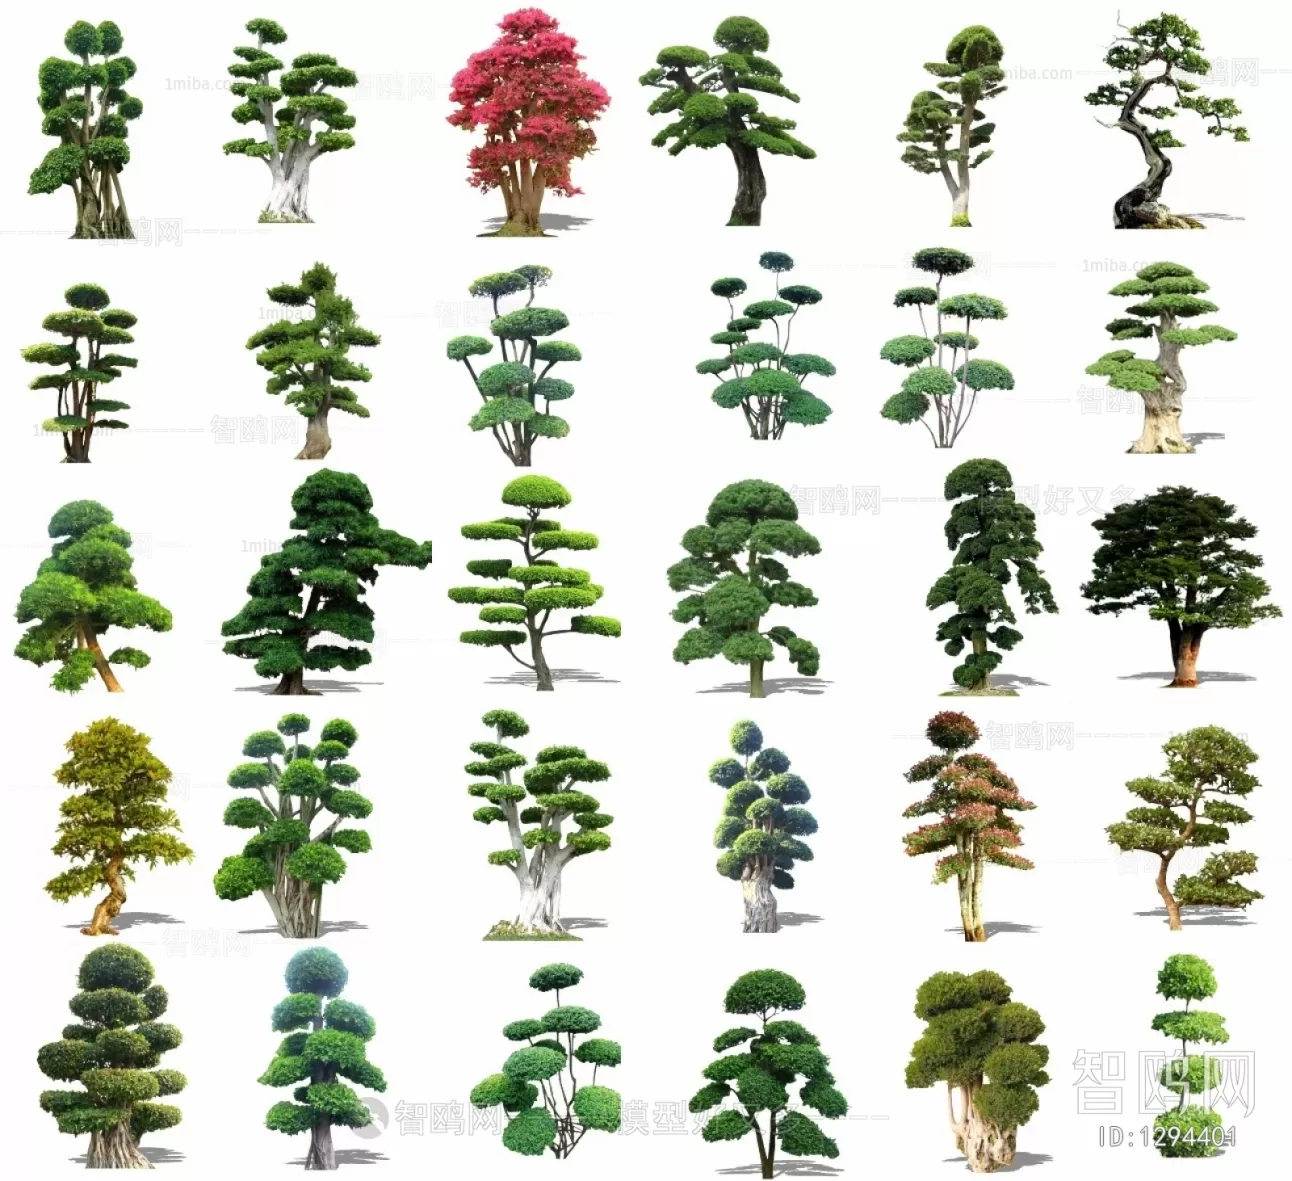 TREE – PLANTS – 3DS MAX MODELS – 167 – PRO